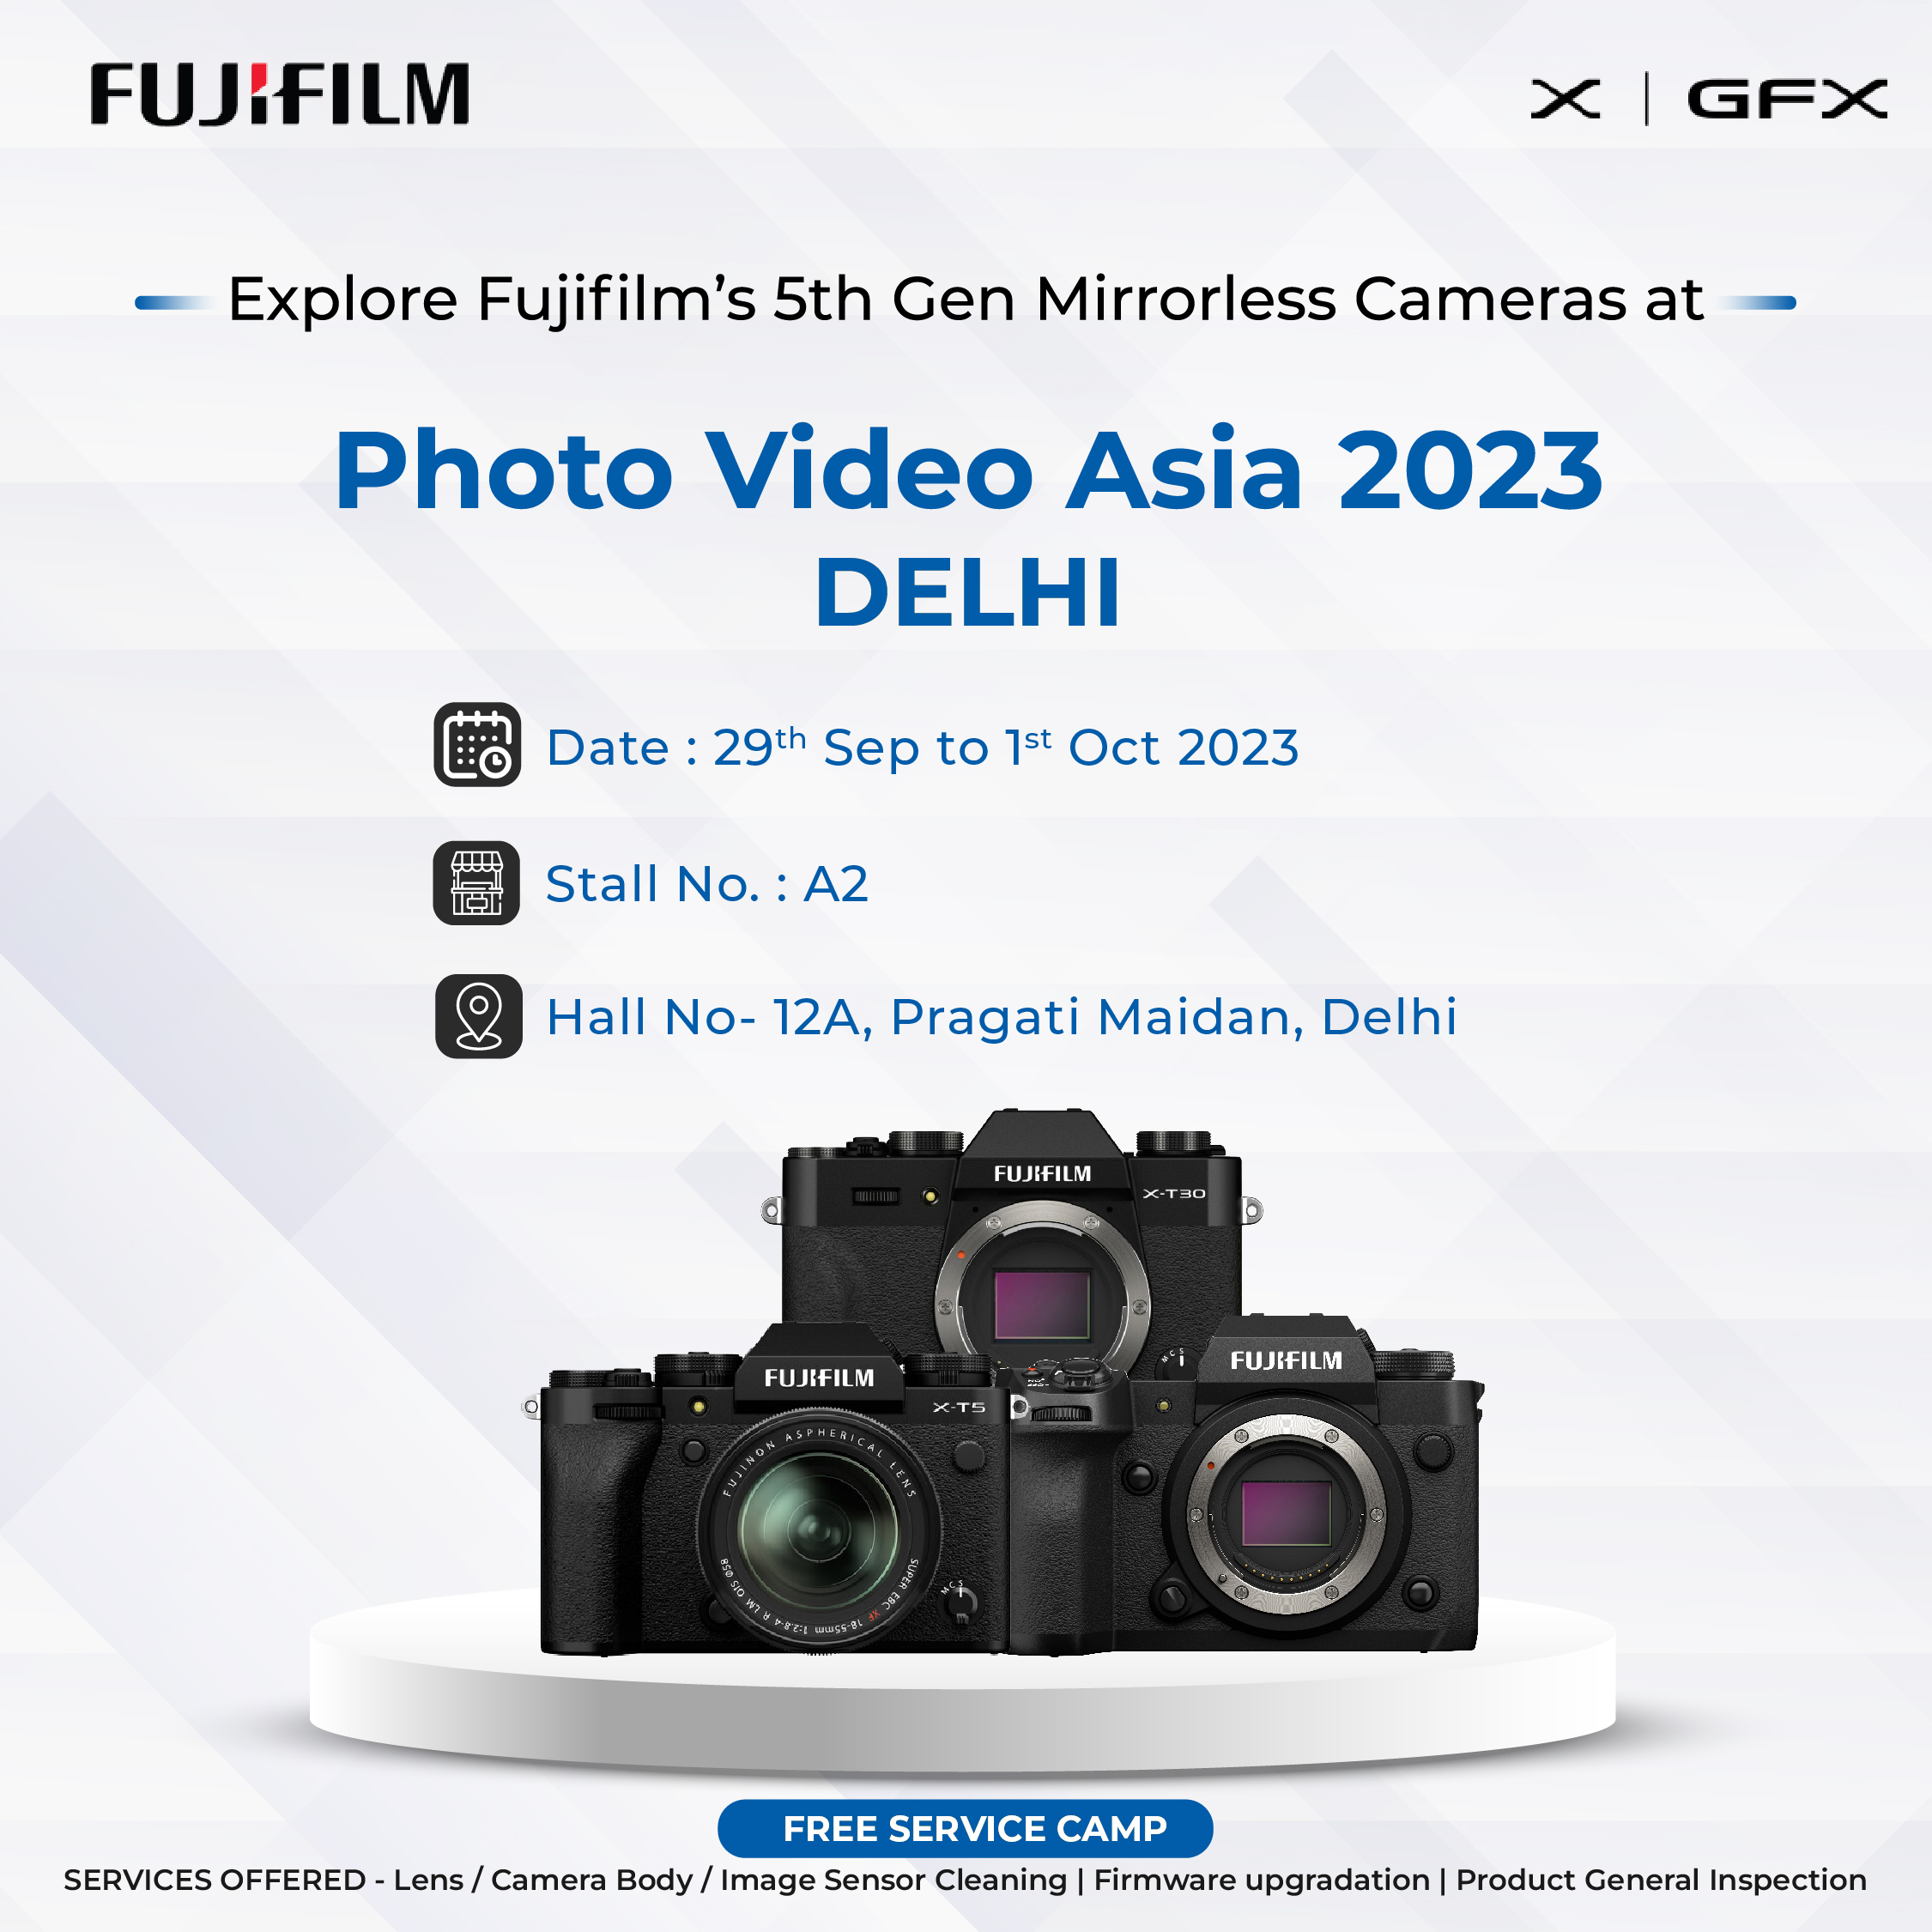 Explore Fujifilm’s 5th Gen Mirrorless Cameras at Photo Video Asia 2023 Delhi